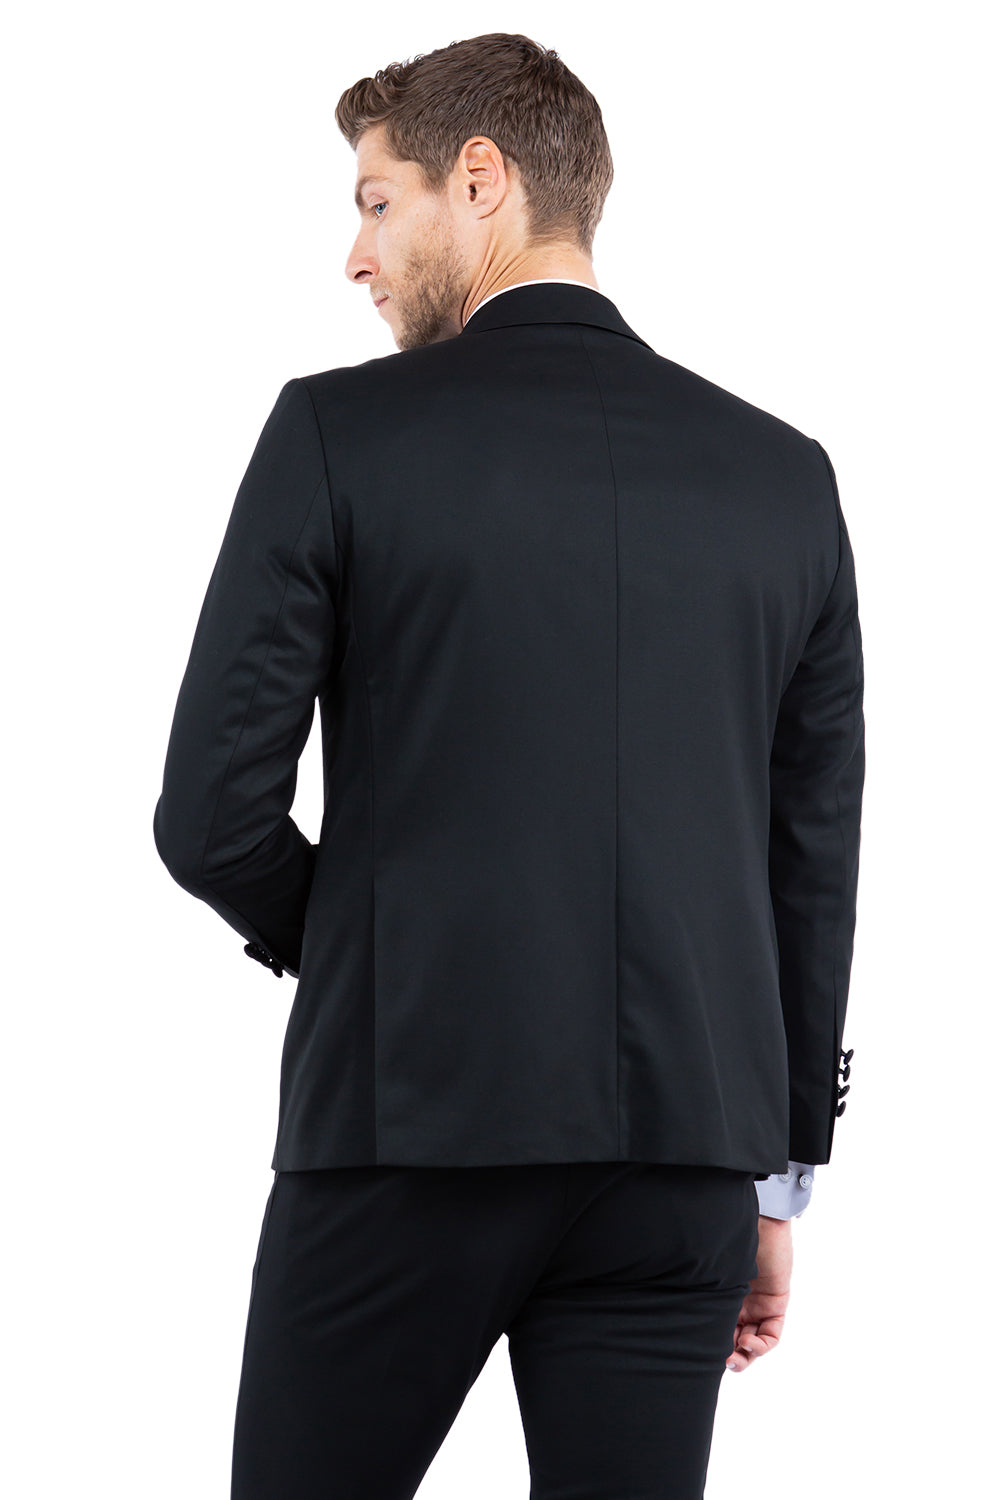 Black Zegarie Notch Lapel Tuxedo Jacket For Men MJT364-01